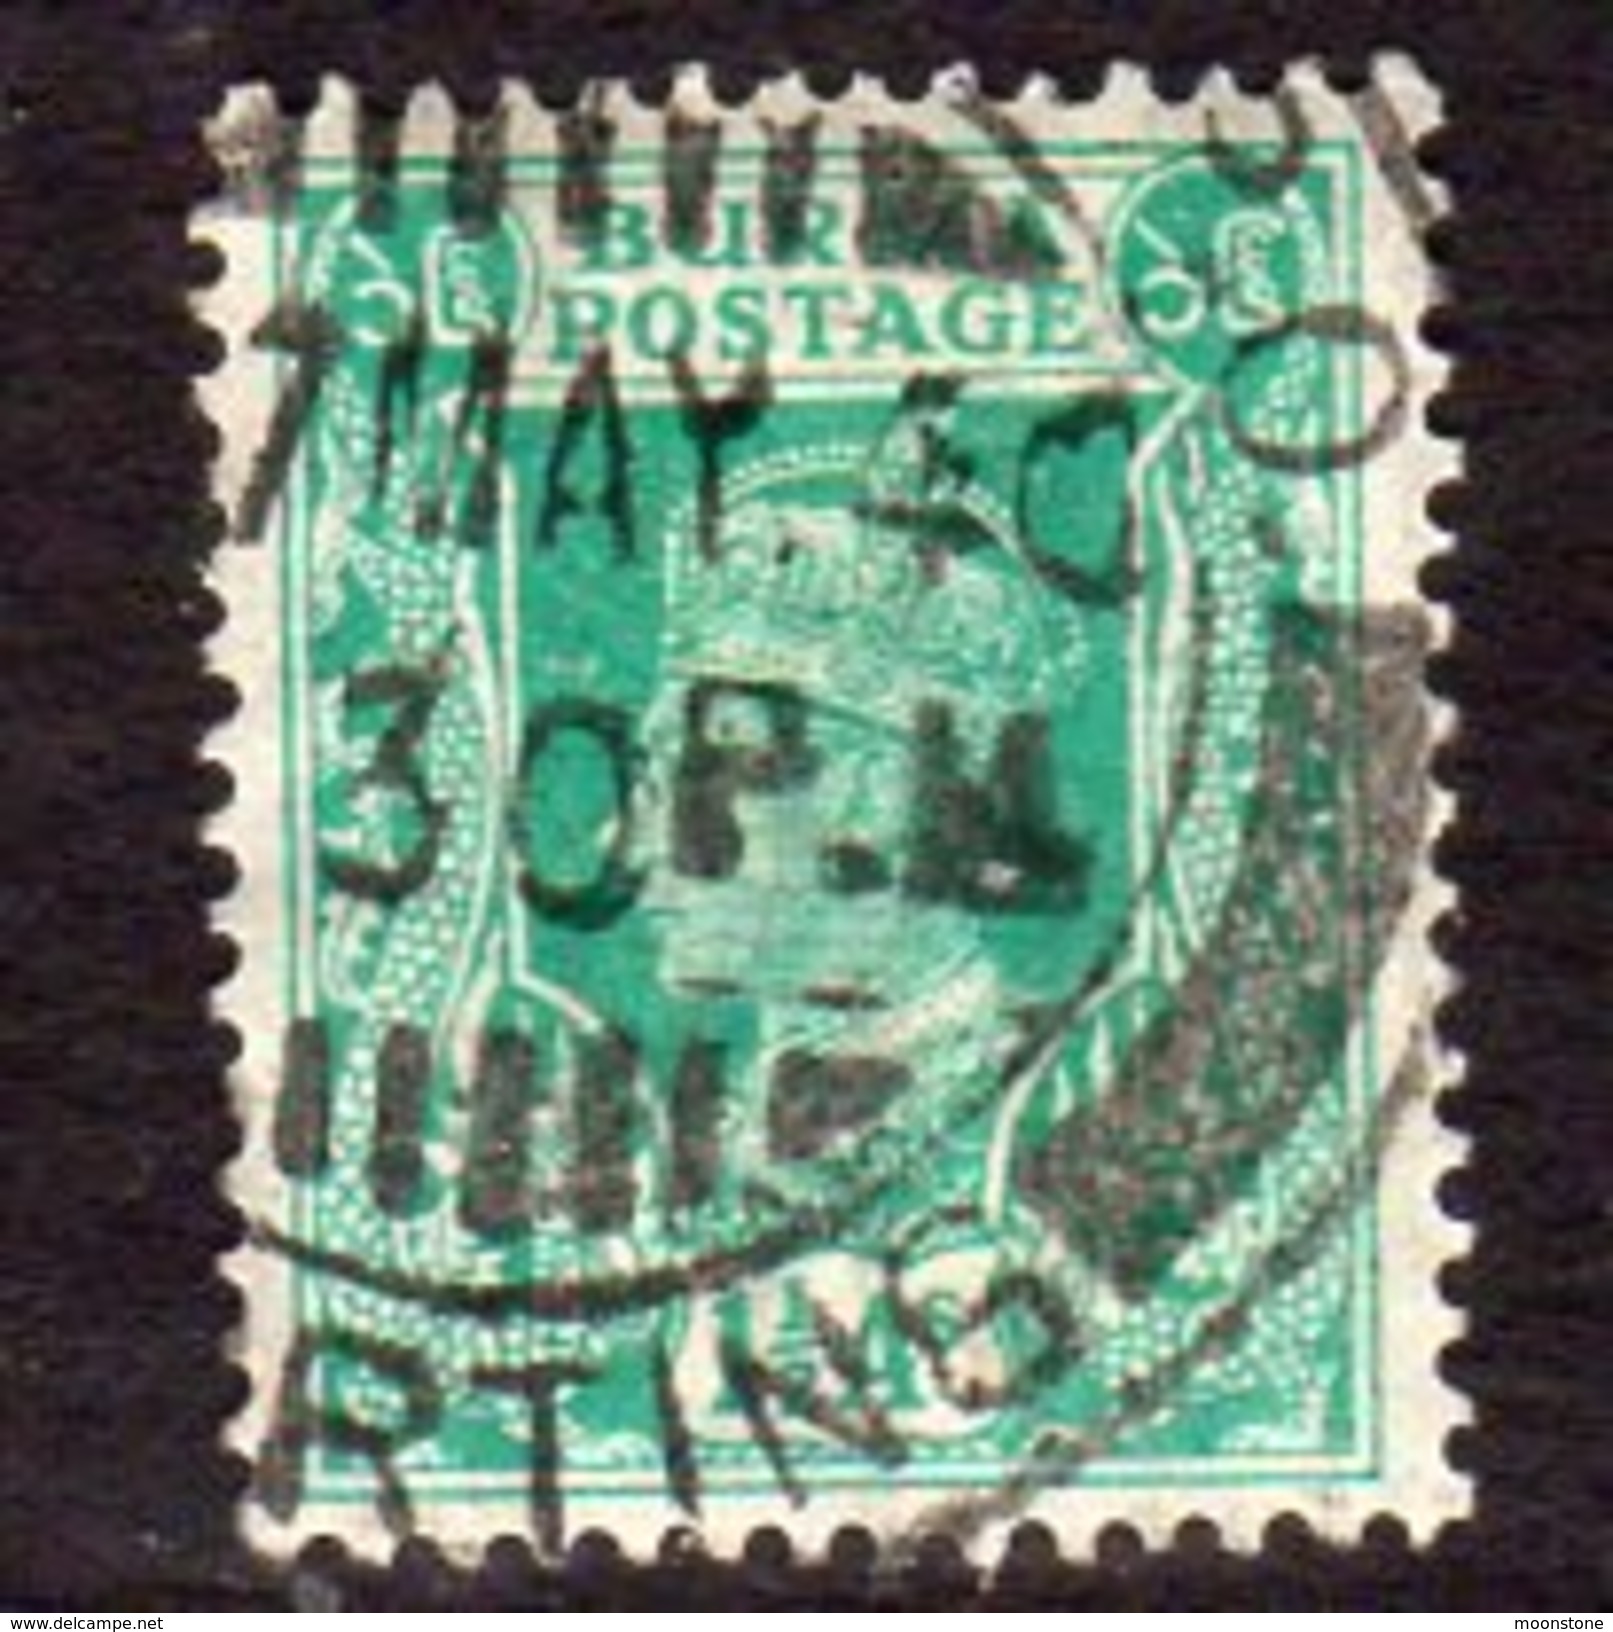 Burma GVI 1938-40 1½a. Turquoise-green, Used, SG 23 (D) - Burma (...-1947)